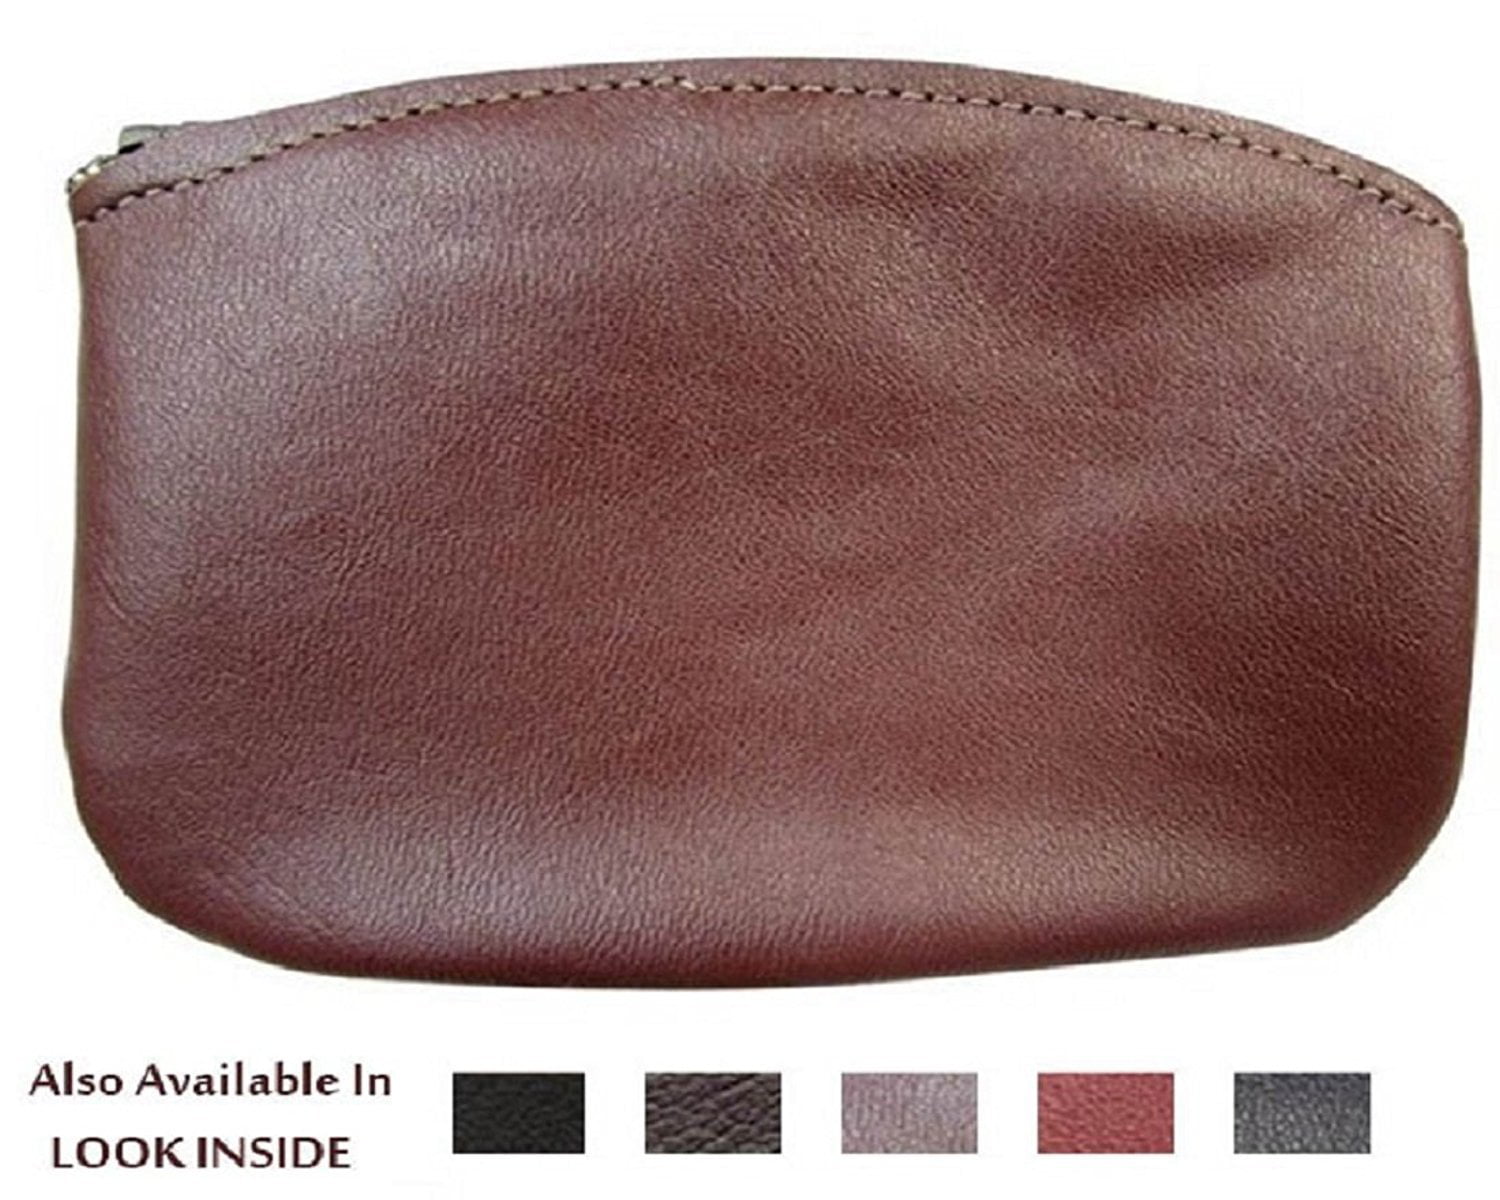 leather change purse zipper